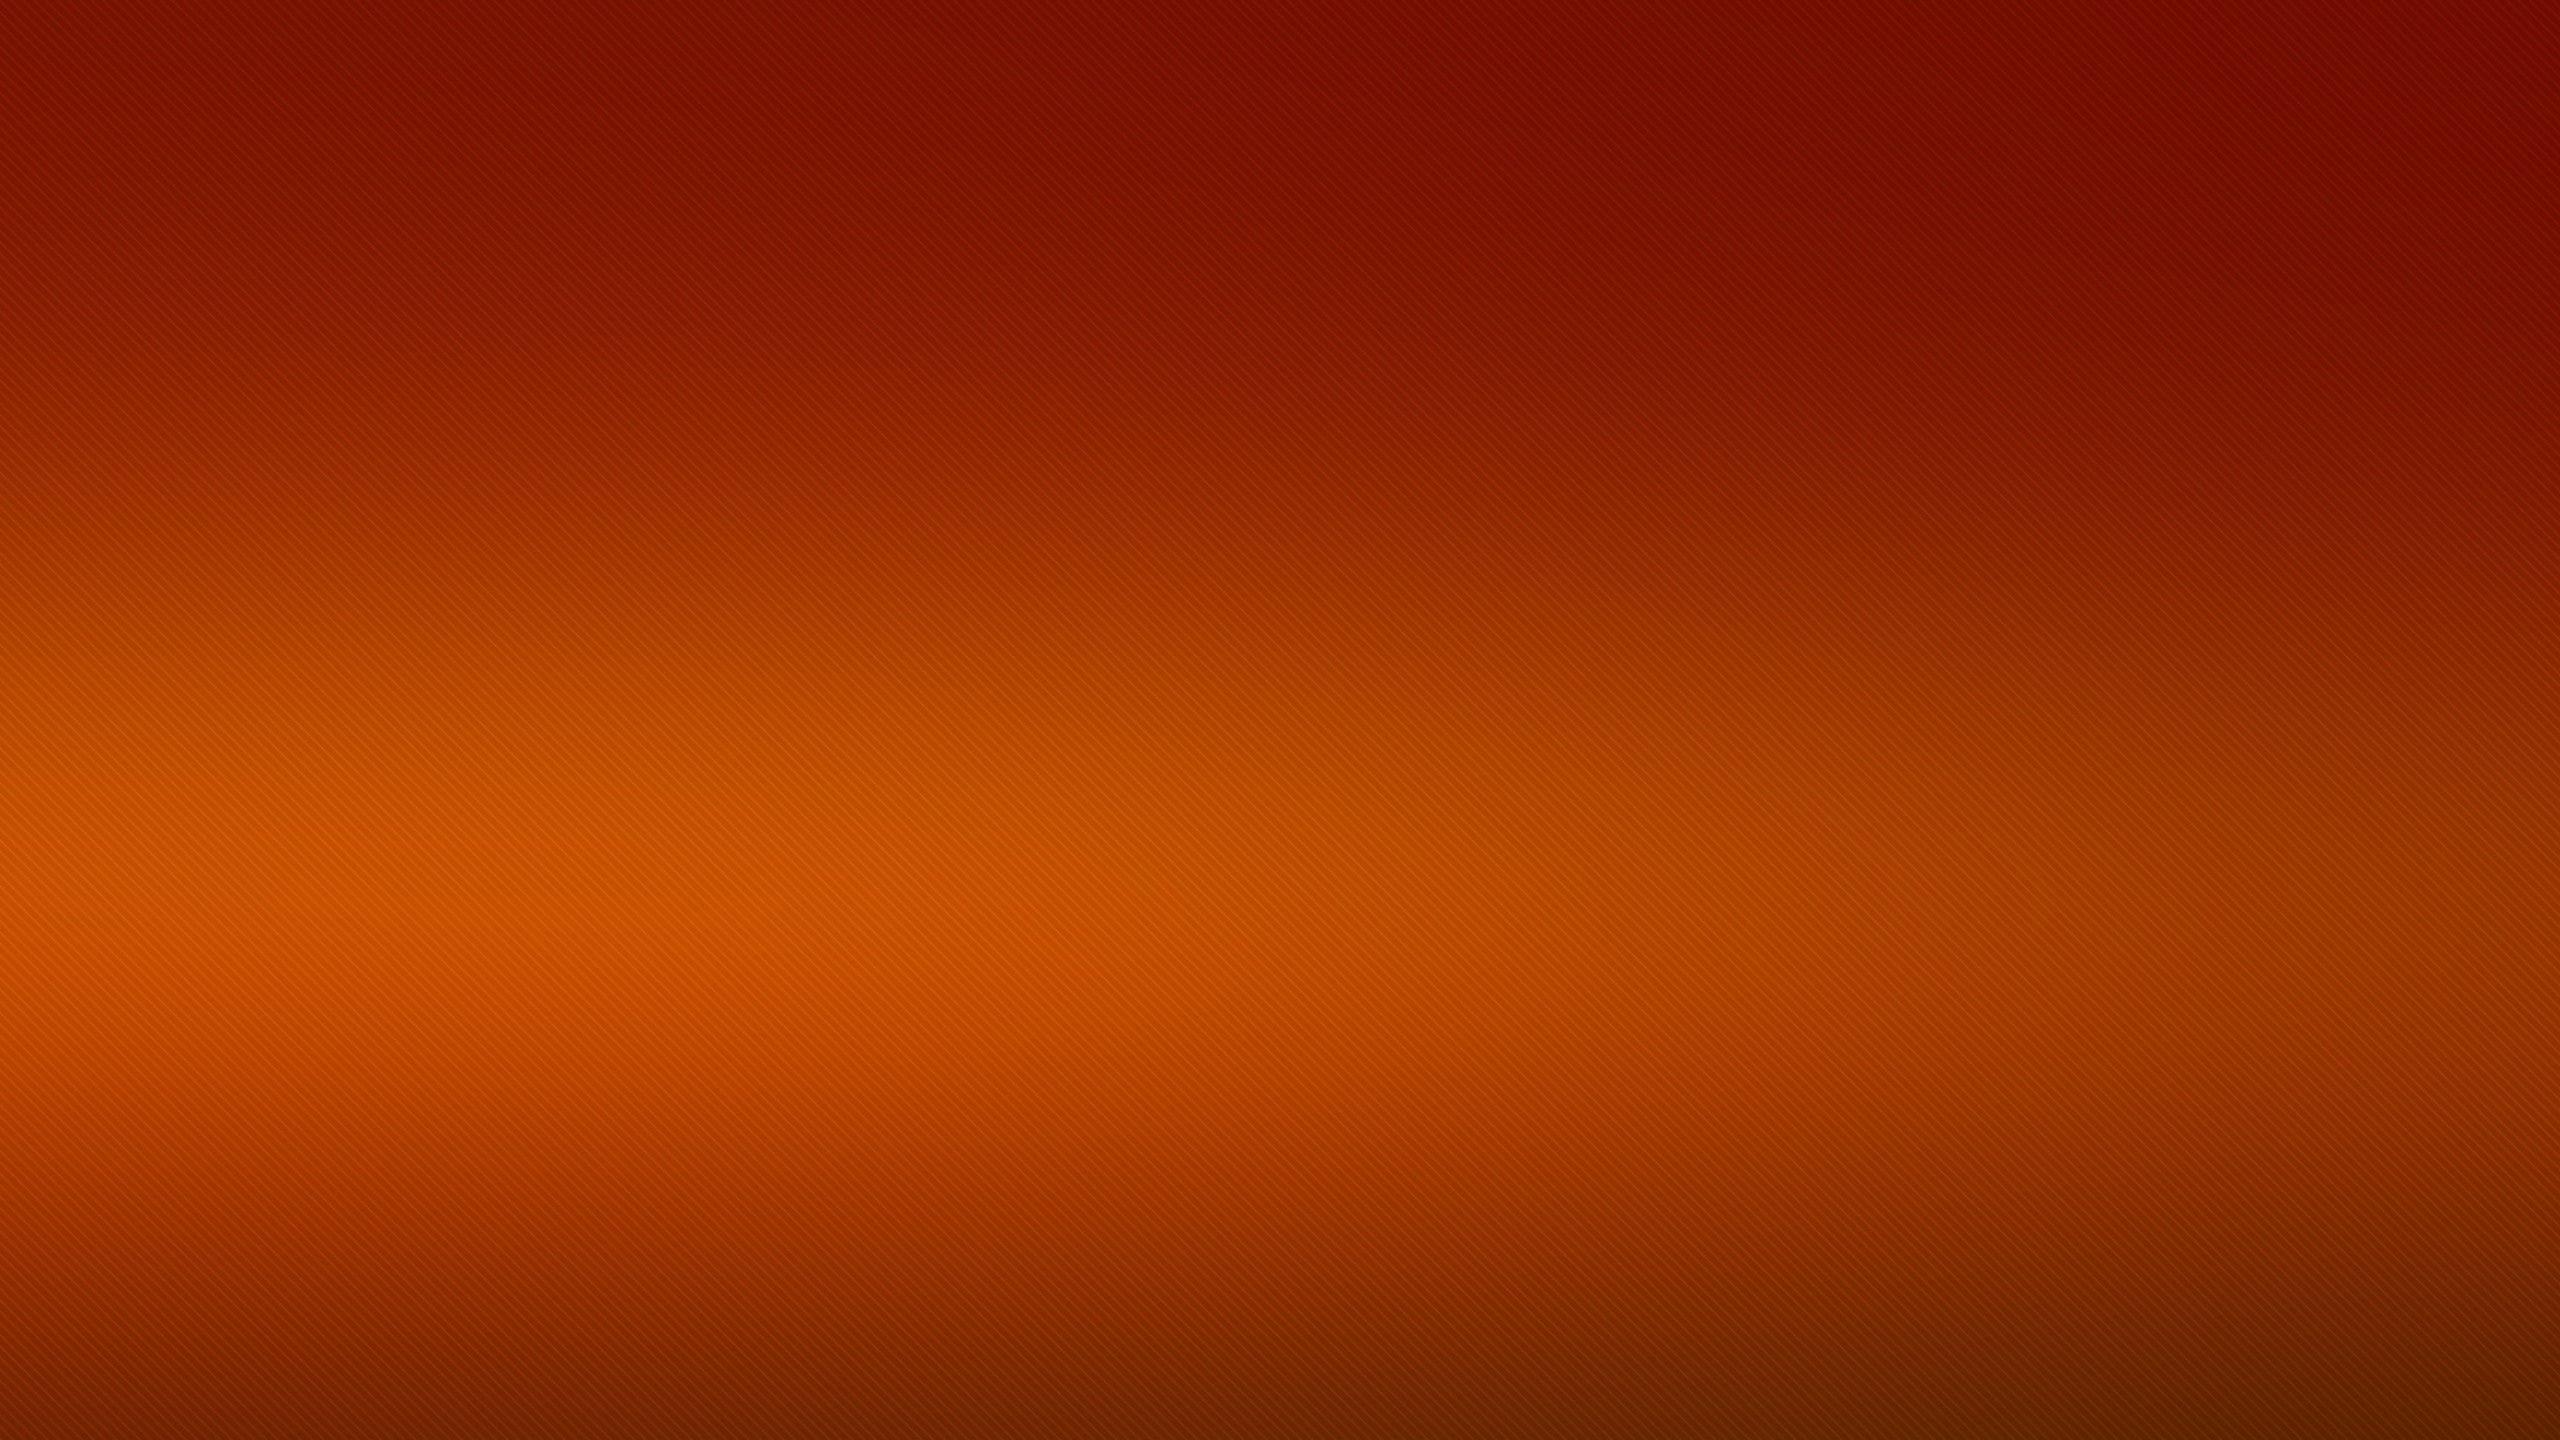 4K Solid Orange Wallpapers - Top Free 4K Solid Orange Backgrounds ...